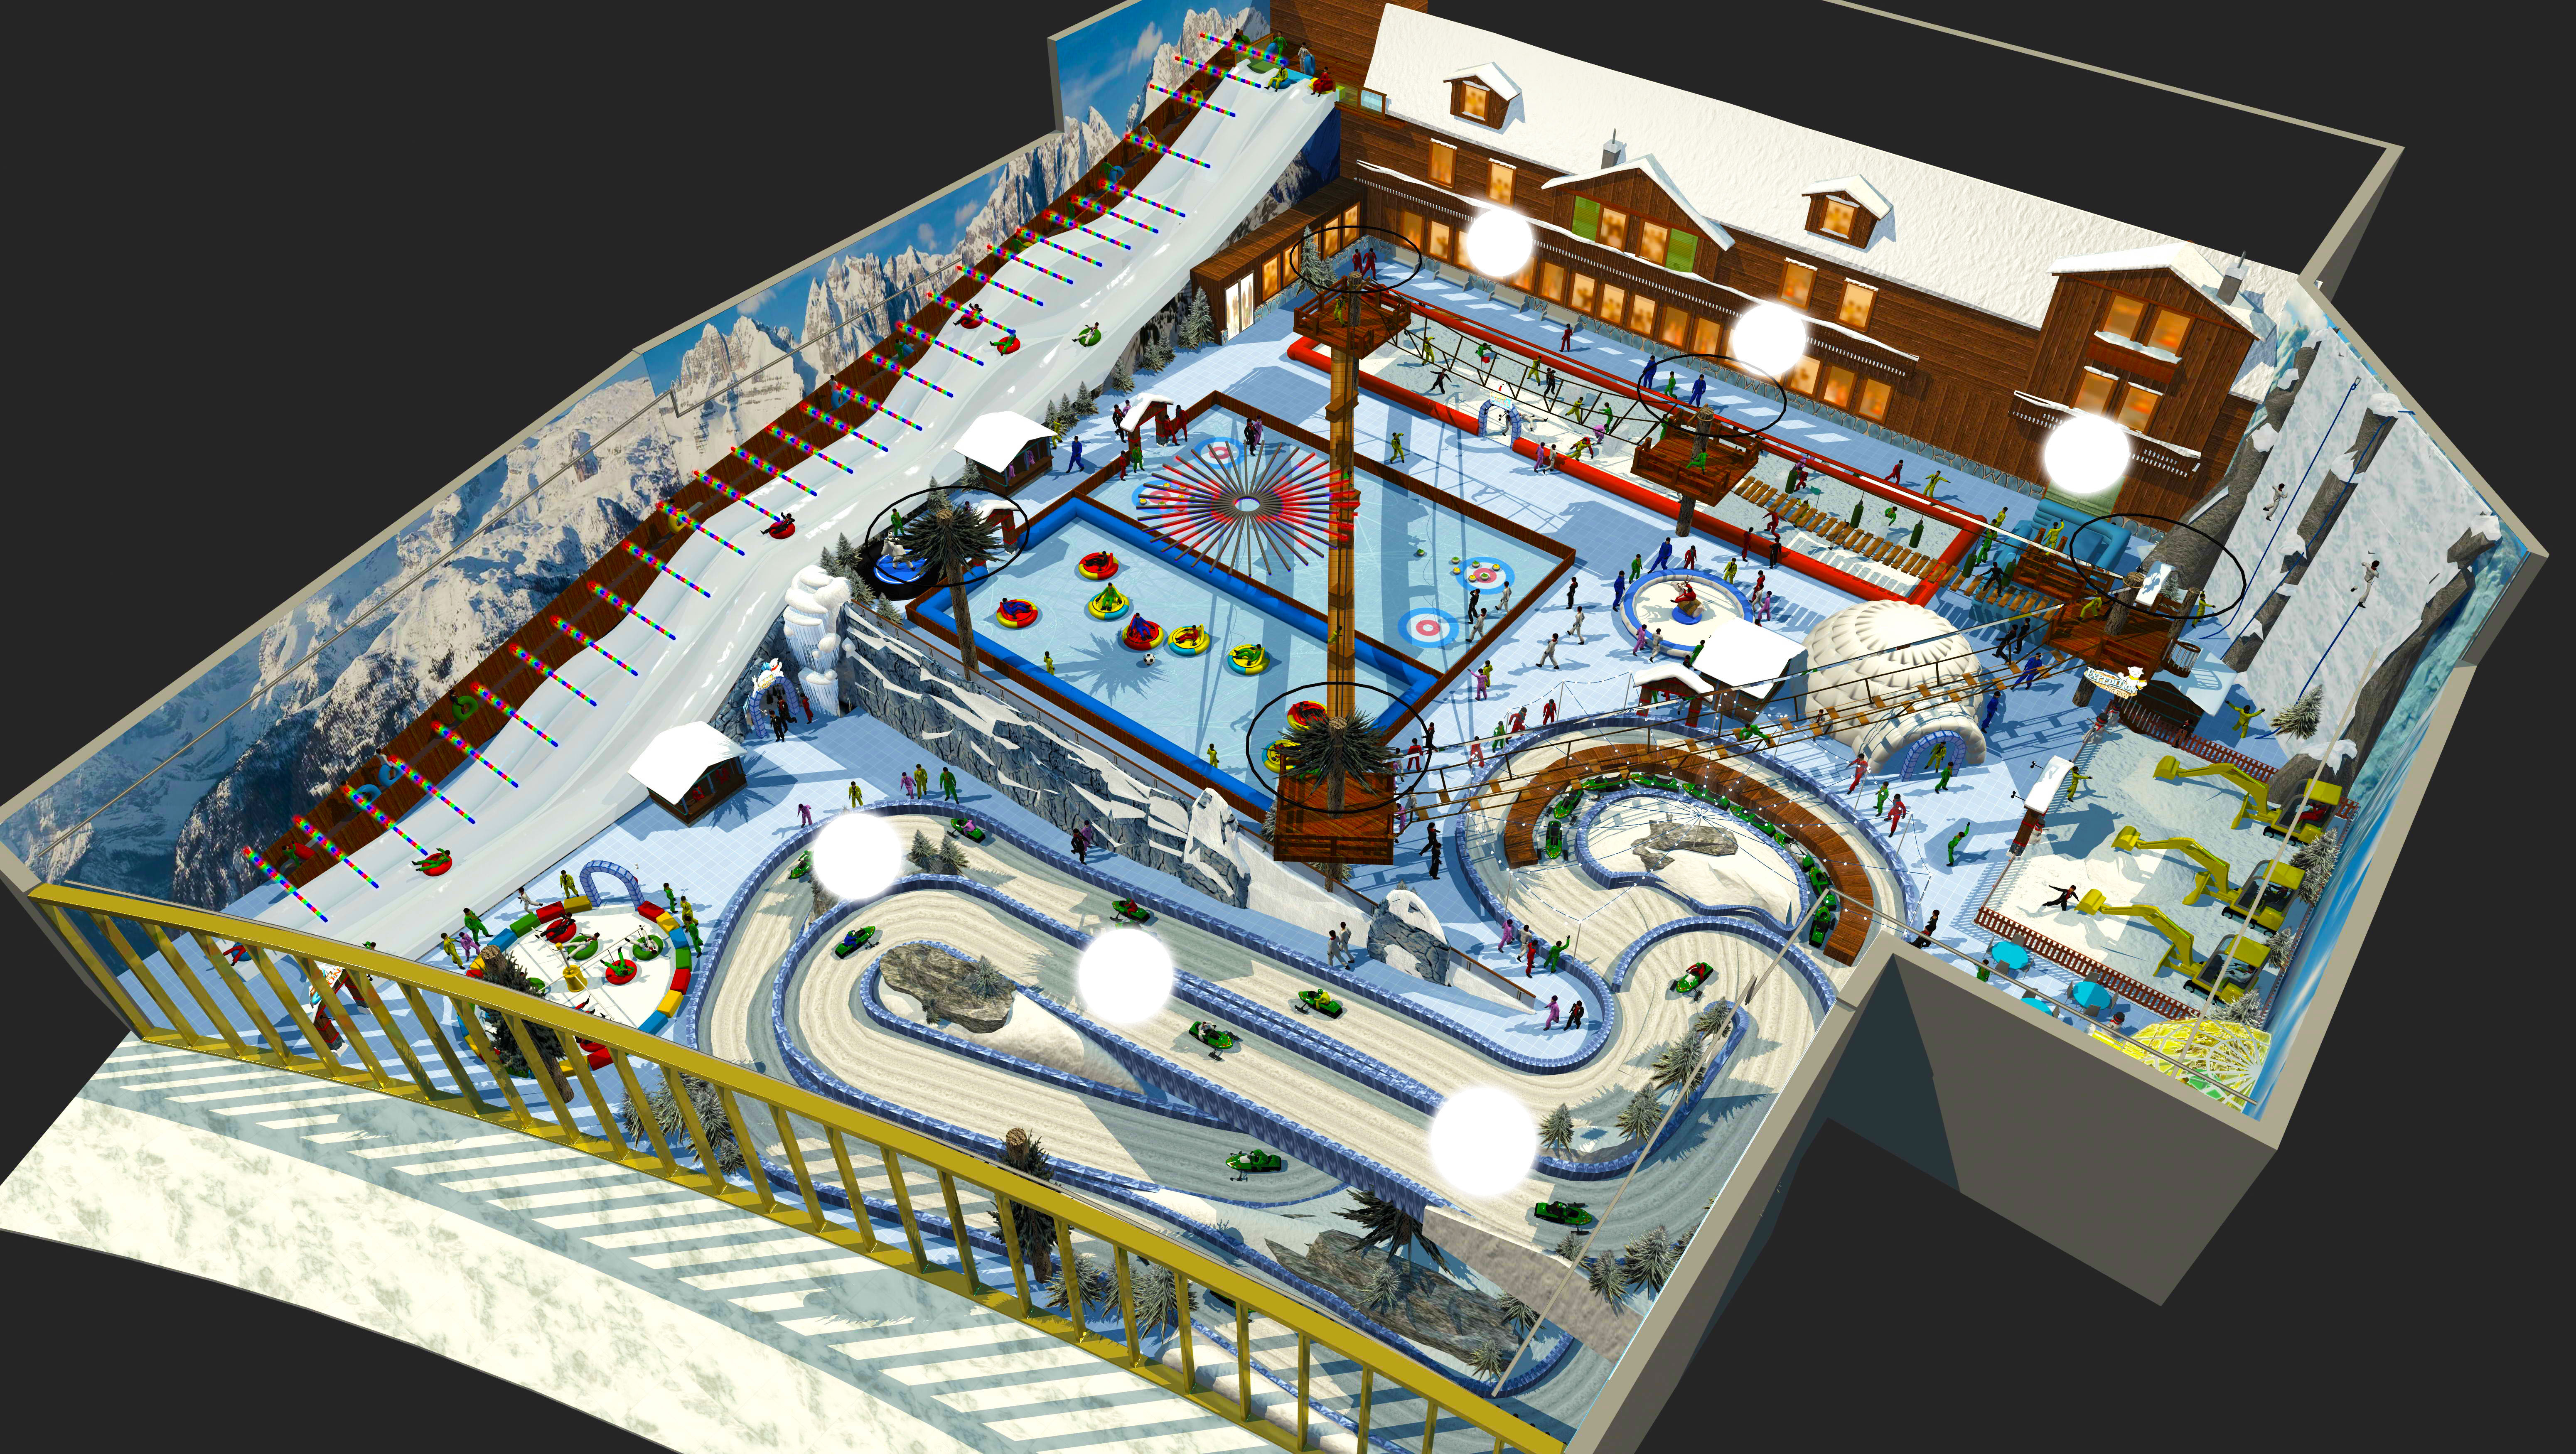 Indoor snow themepark - Unlimited Snow Village, Riyadh